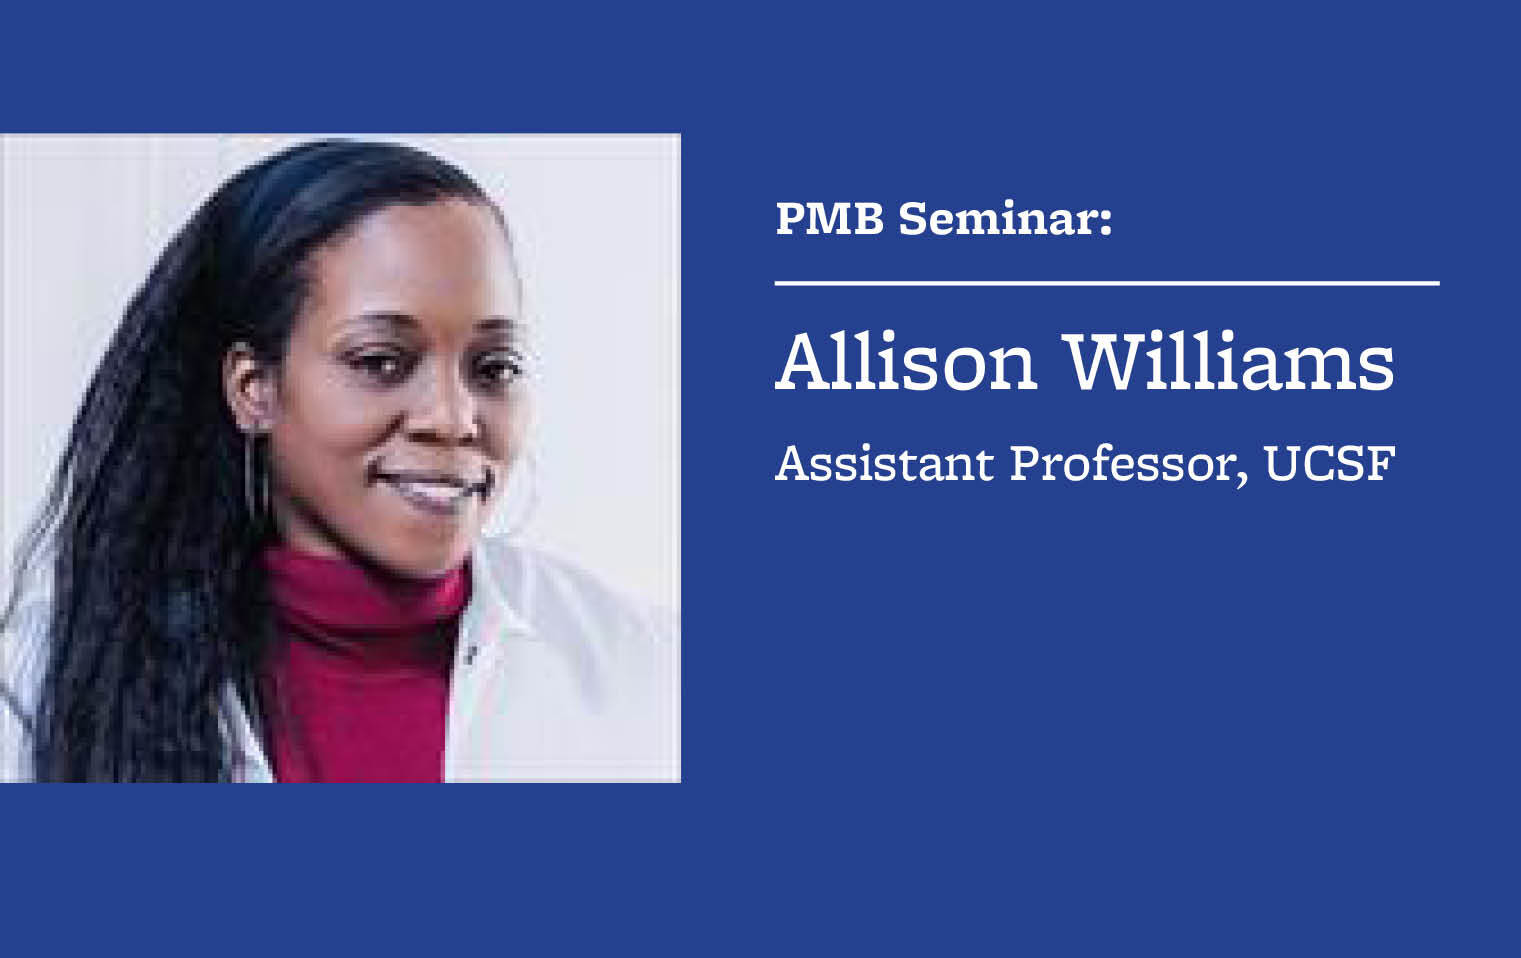 Portrait of Allison Williams saying "PMB seminar: Allison Williams, Assistant Professor, UCSF" 